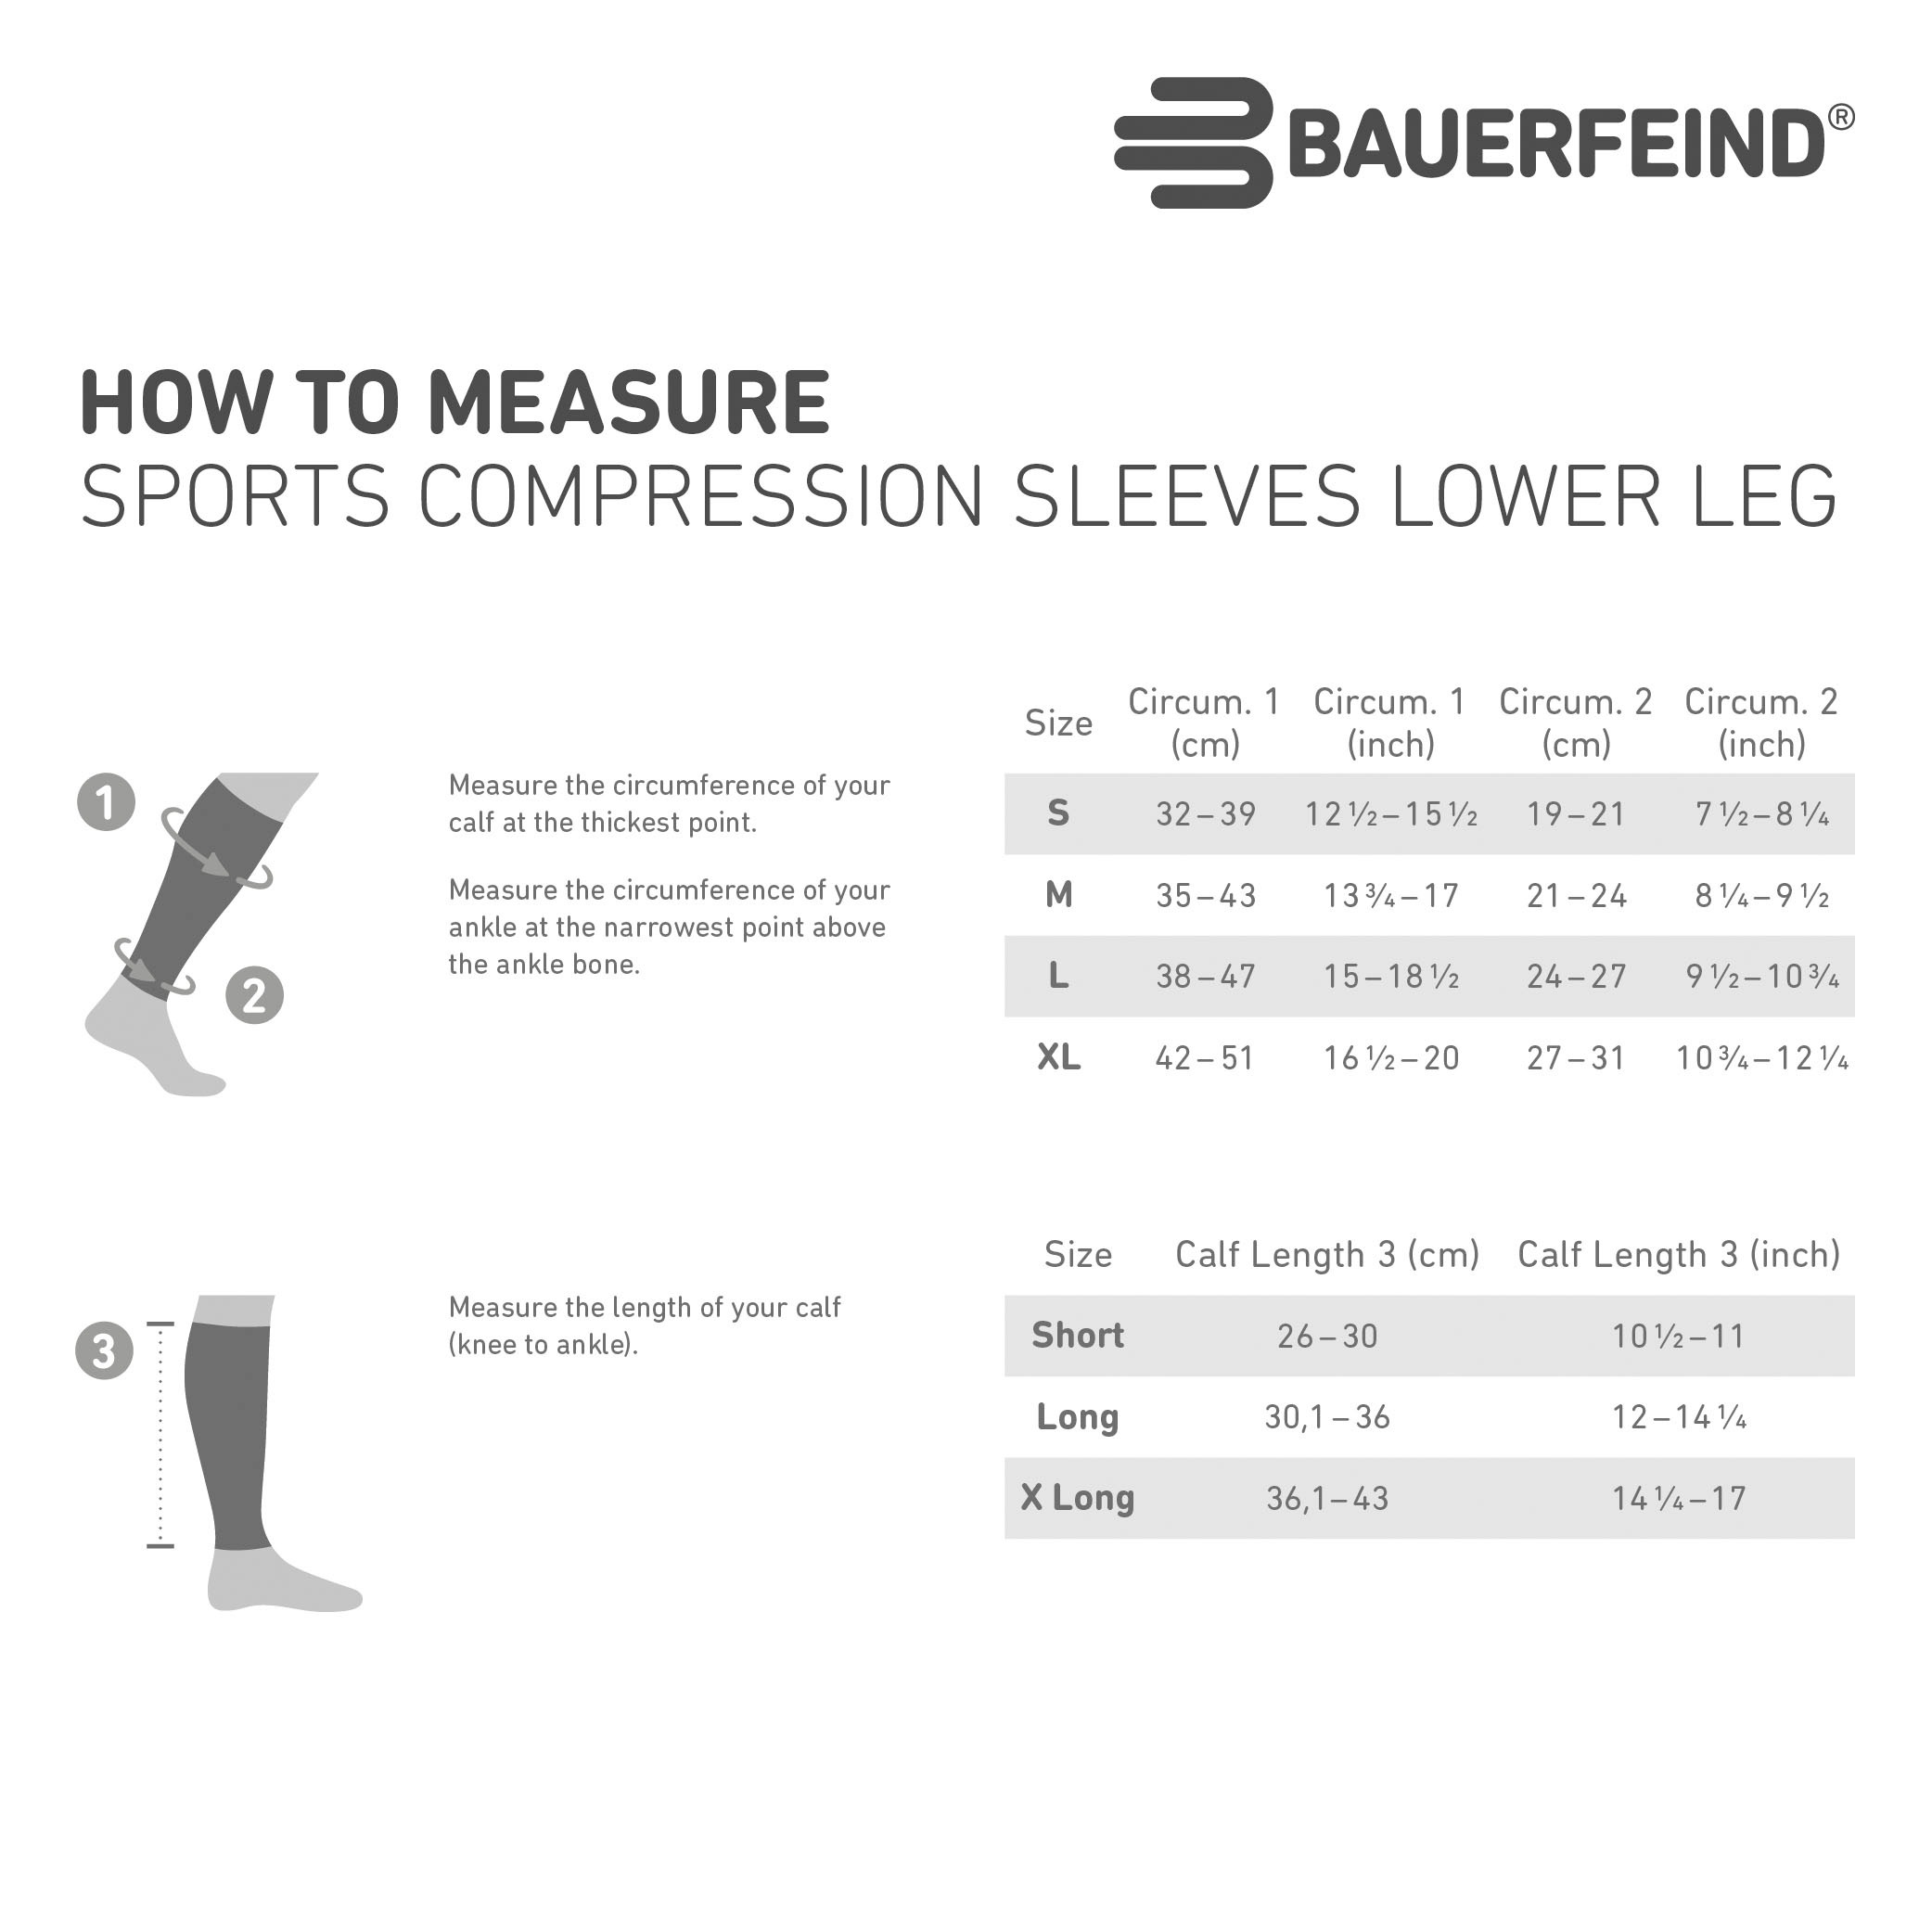 Bauerfeind Bandage "Compression Sleeves Lower Leg" 2